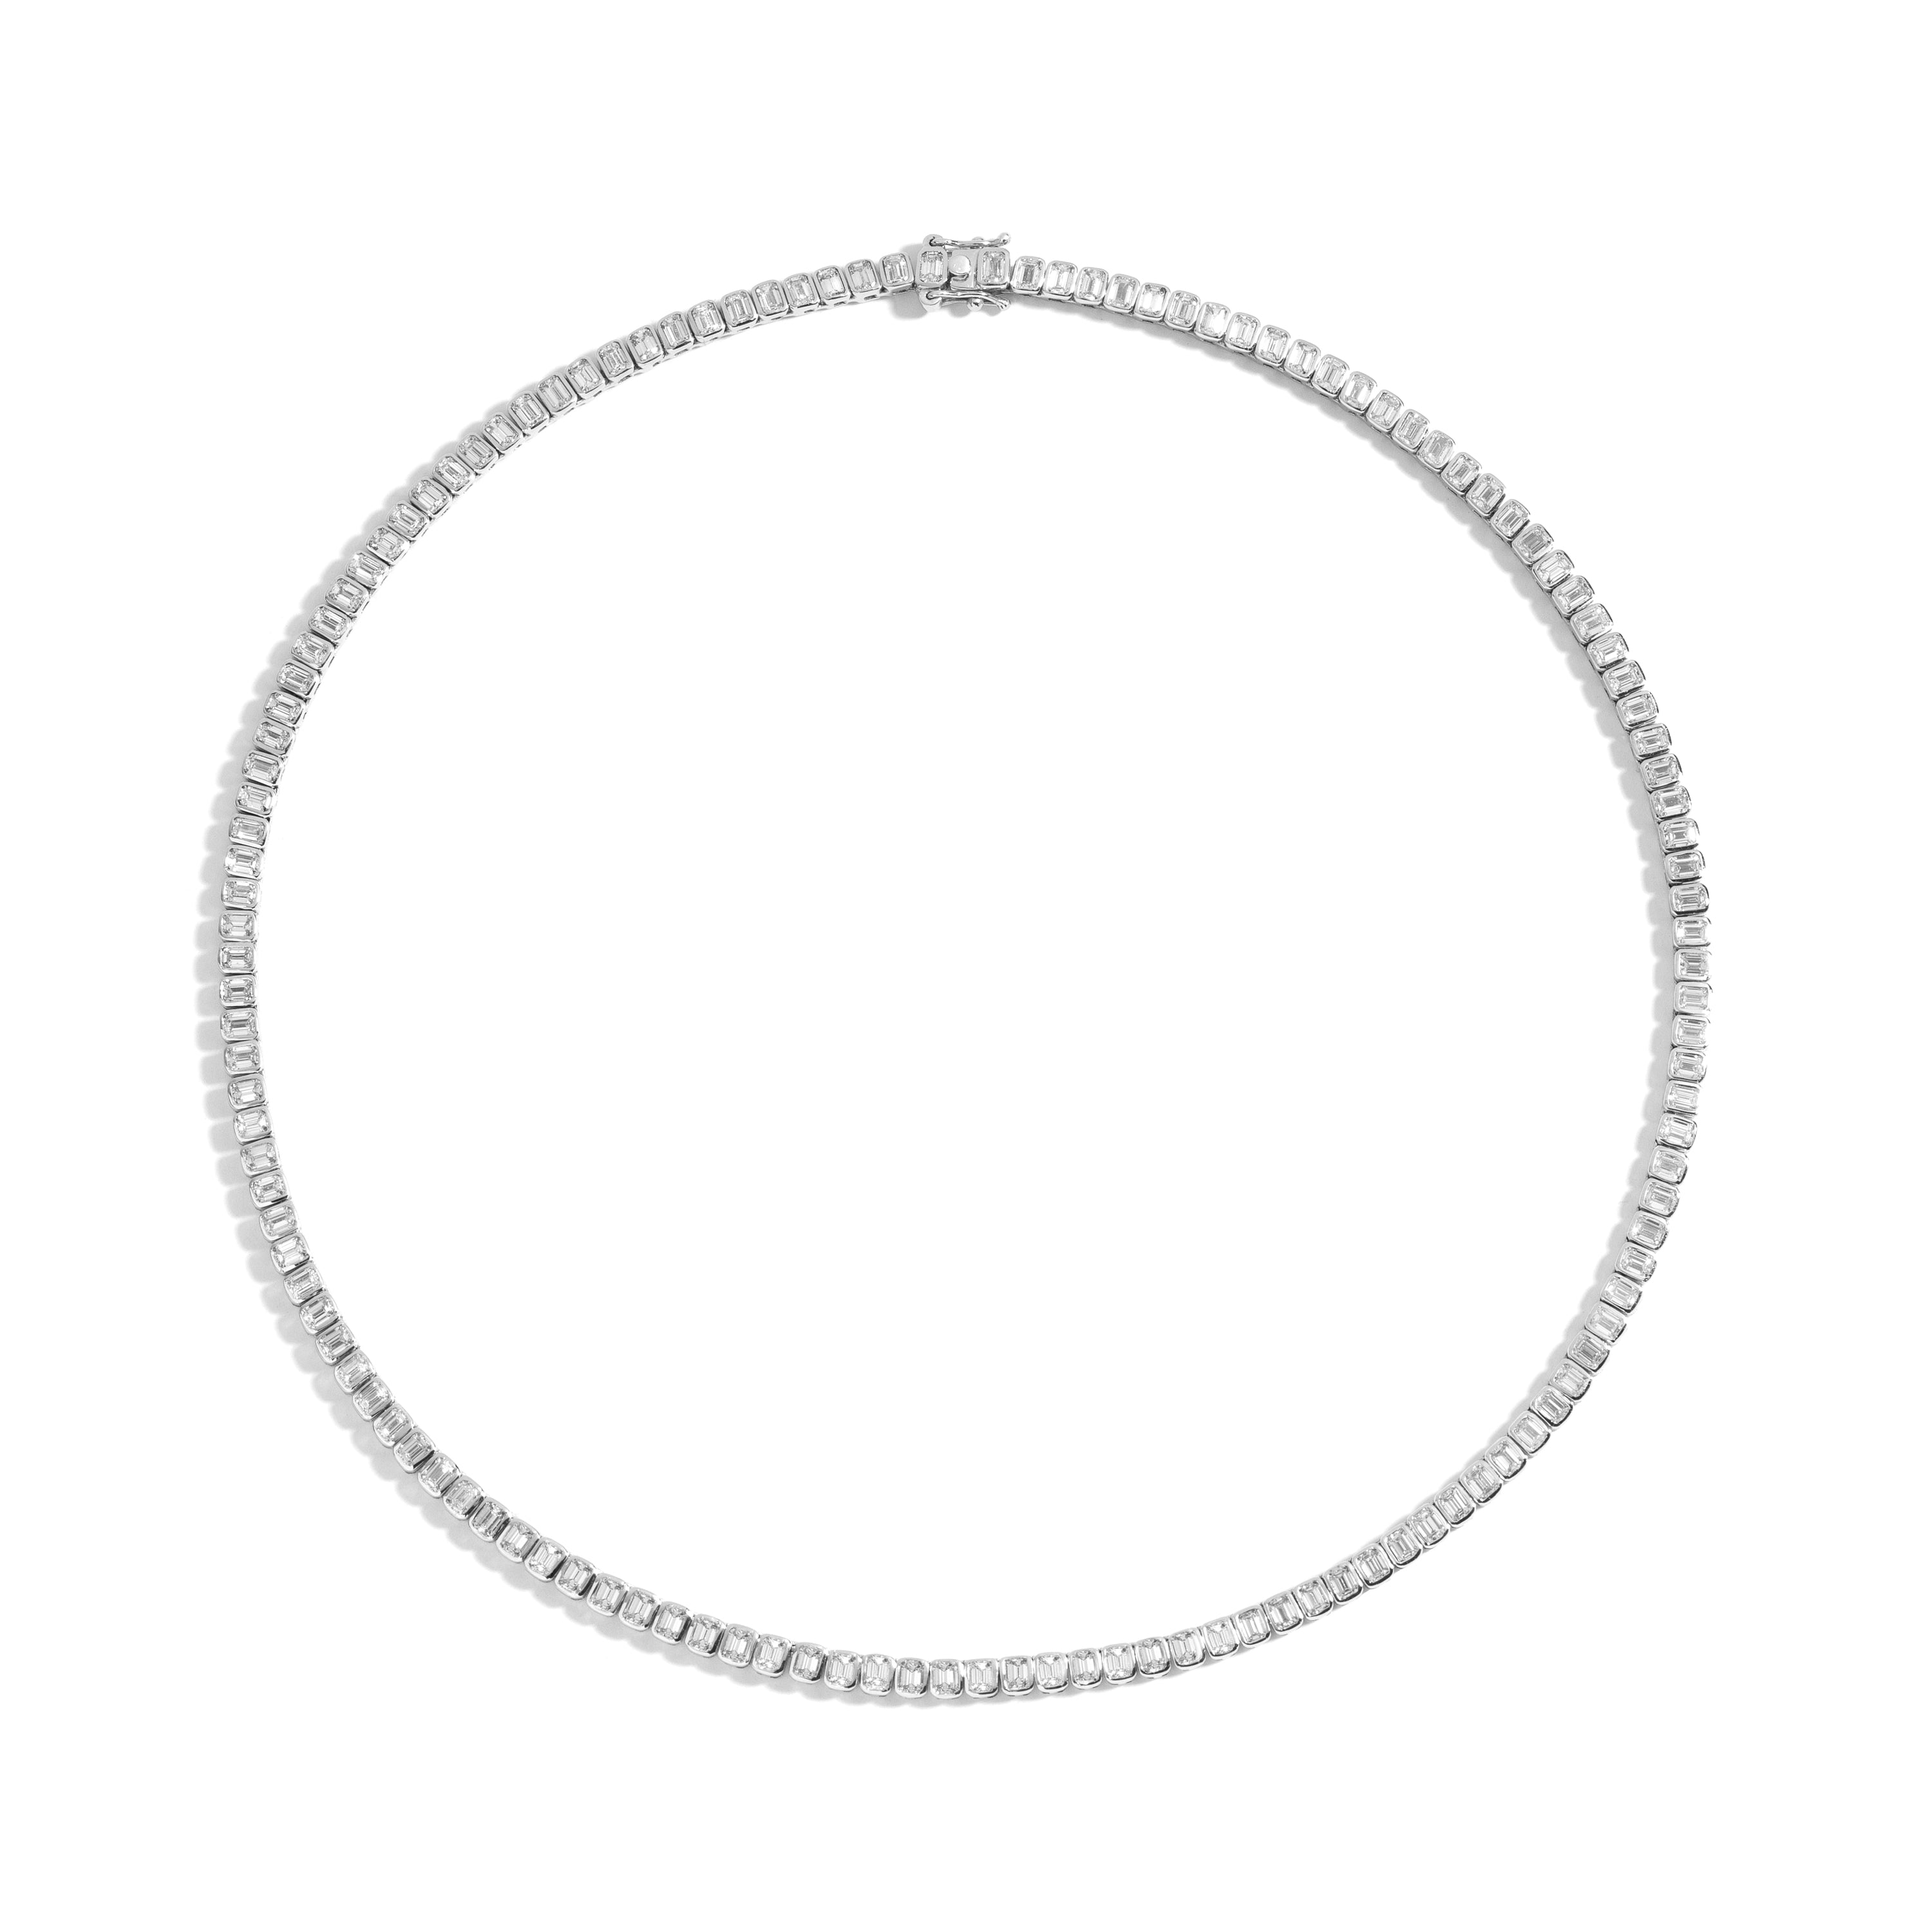 Buy Niscka Tennis Necklace with Earrings Online